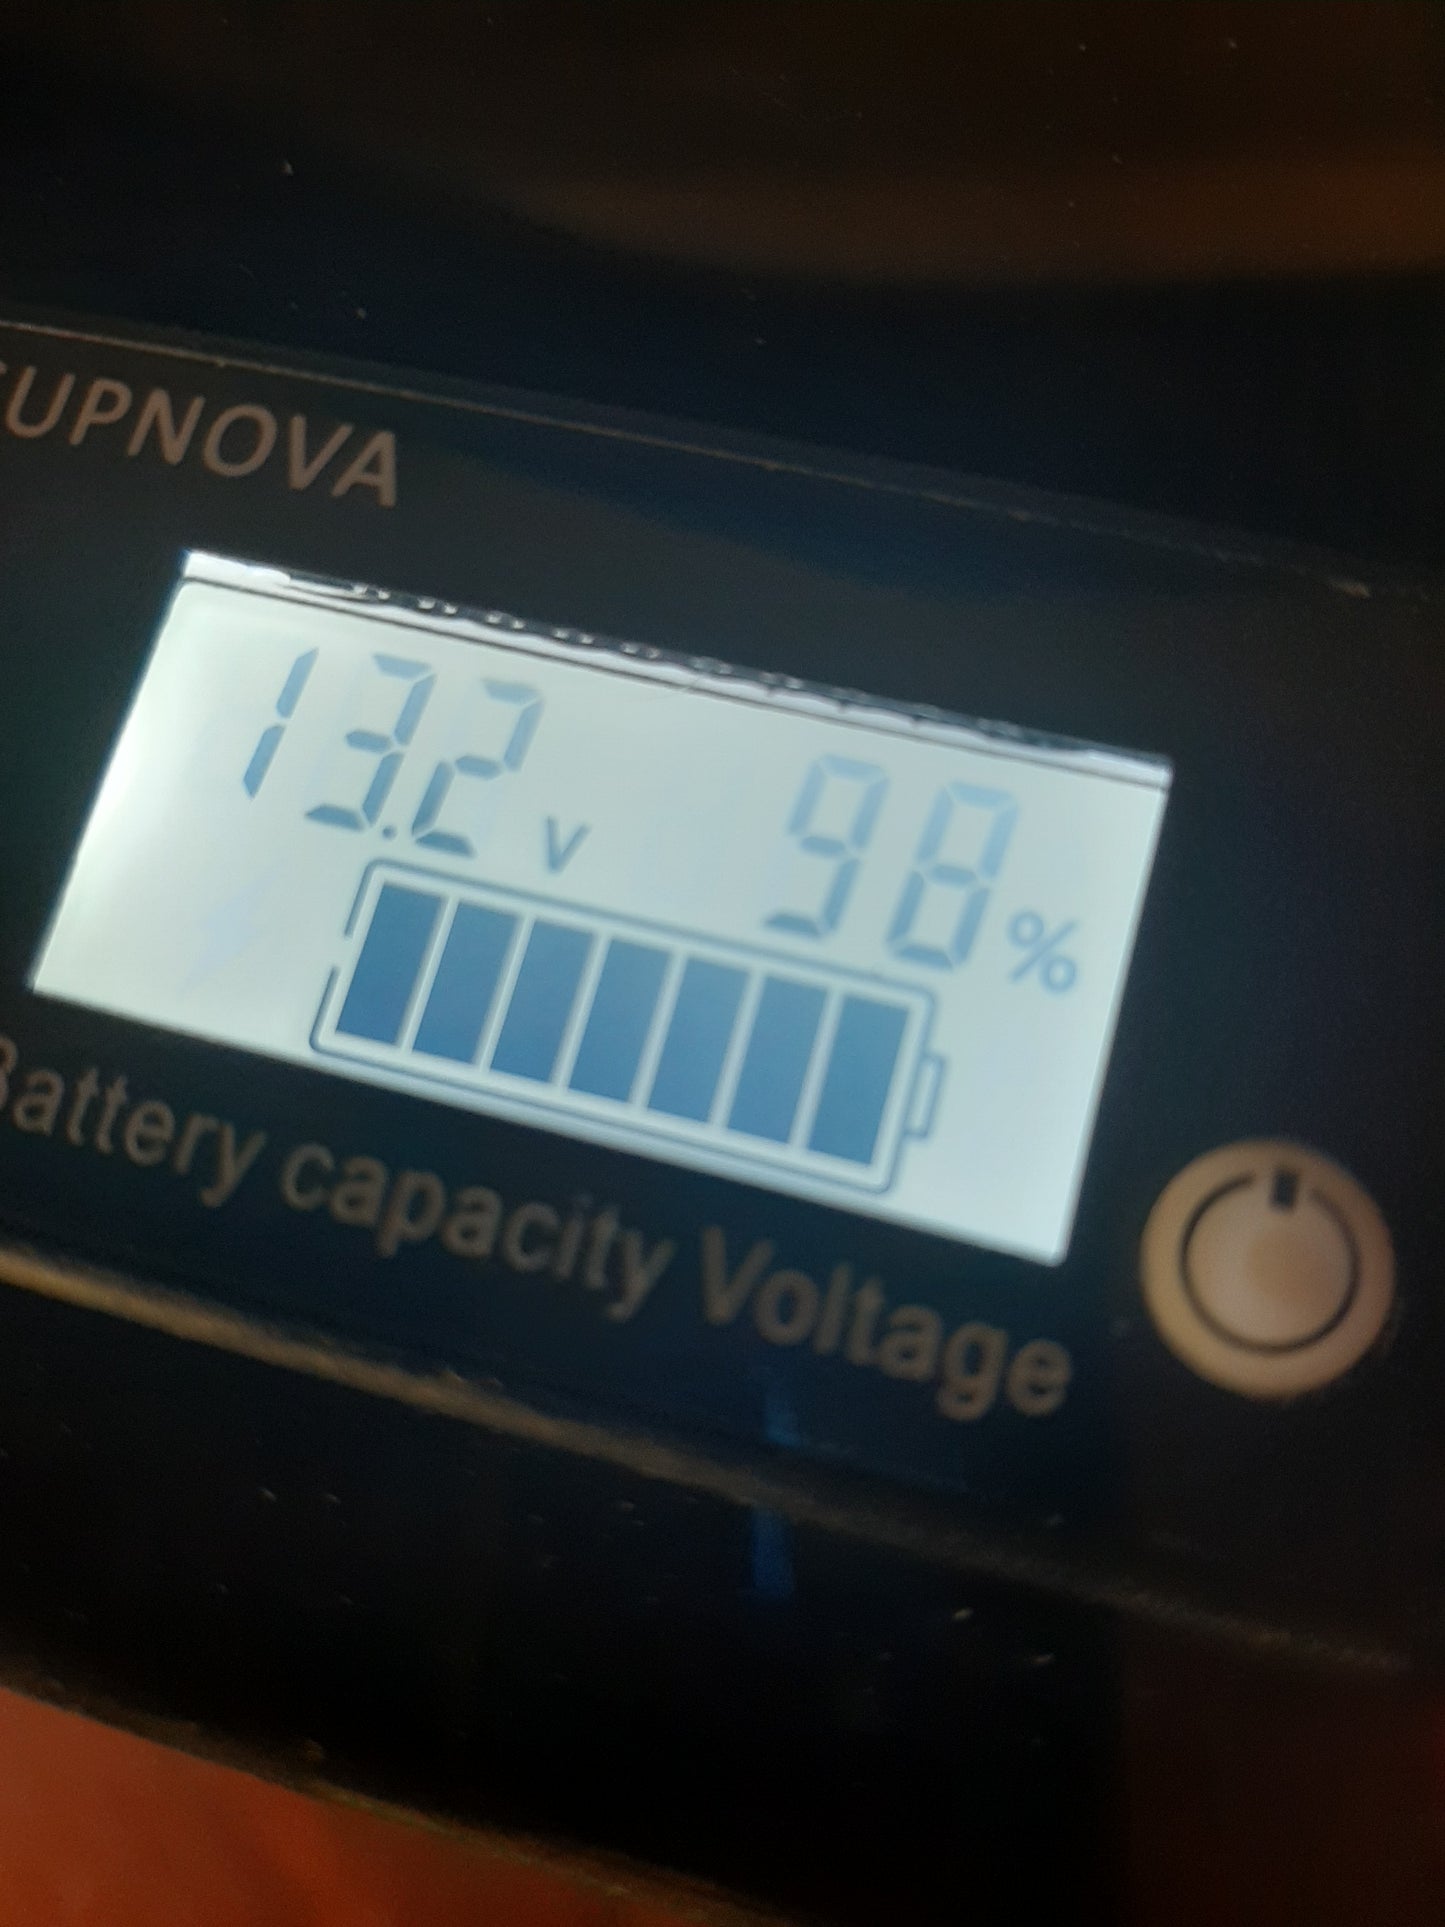 Batterie lithium 12v 150Ah avec écran led LIFEP04 P R O M O